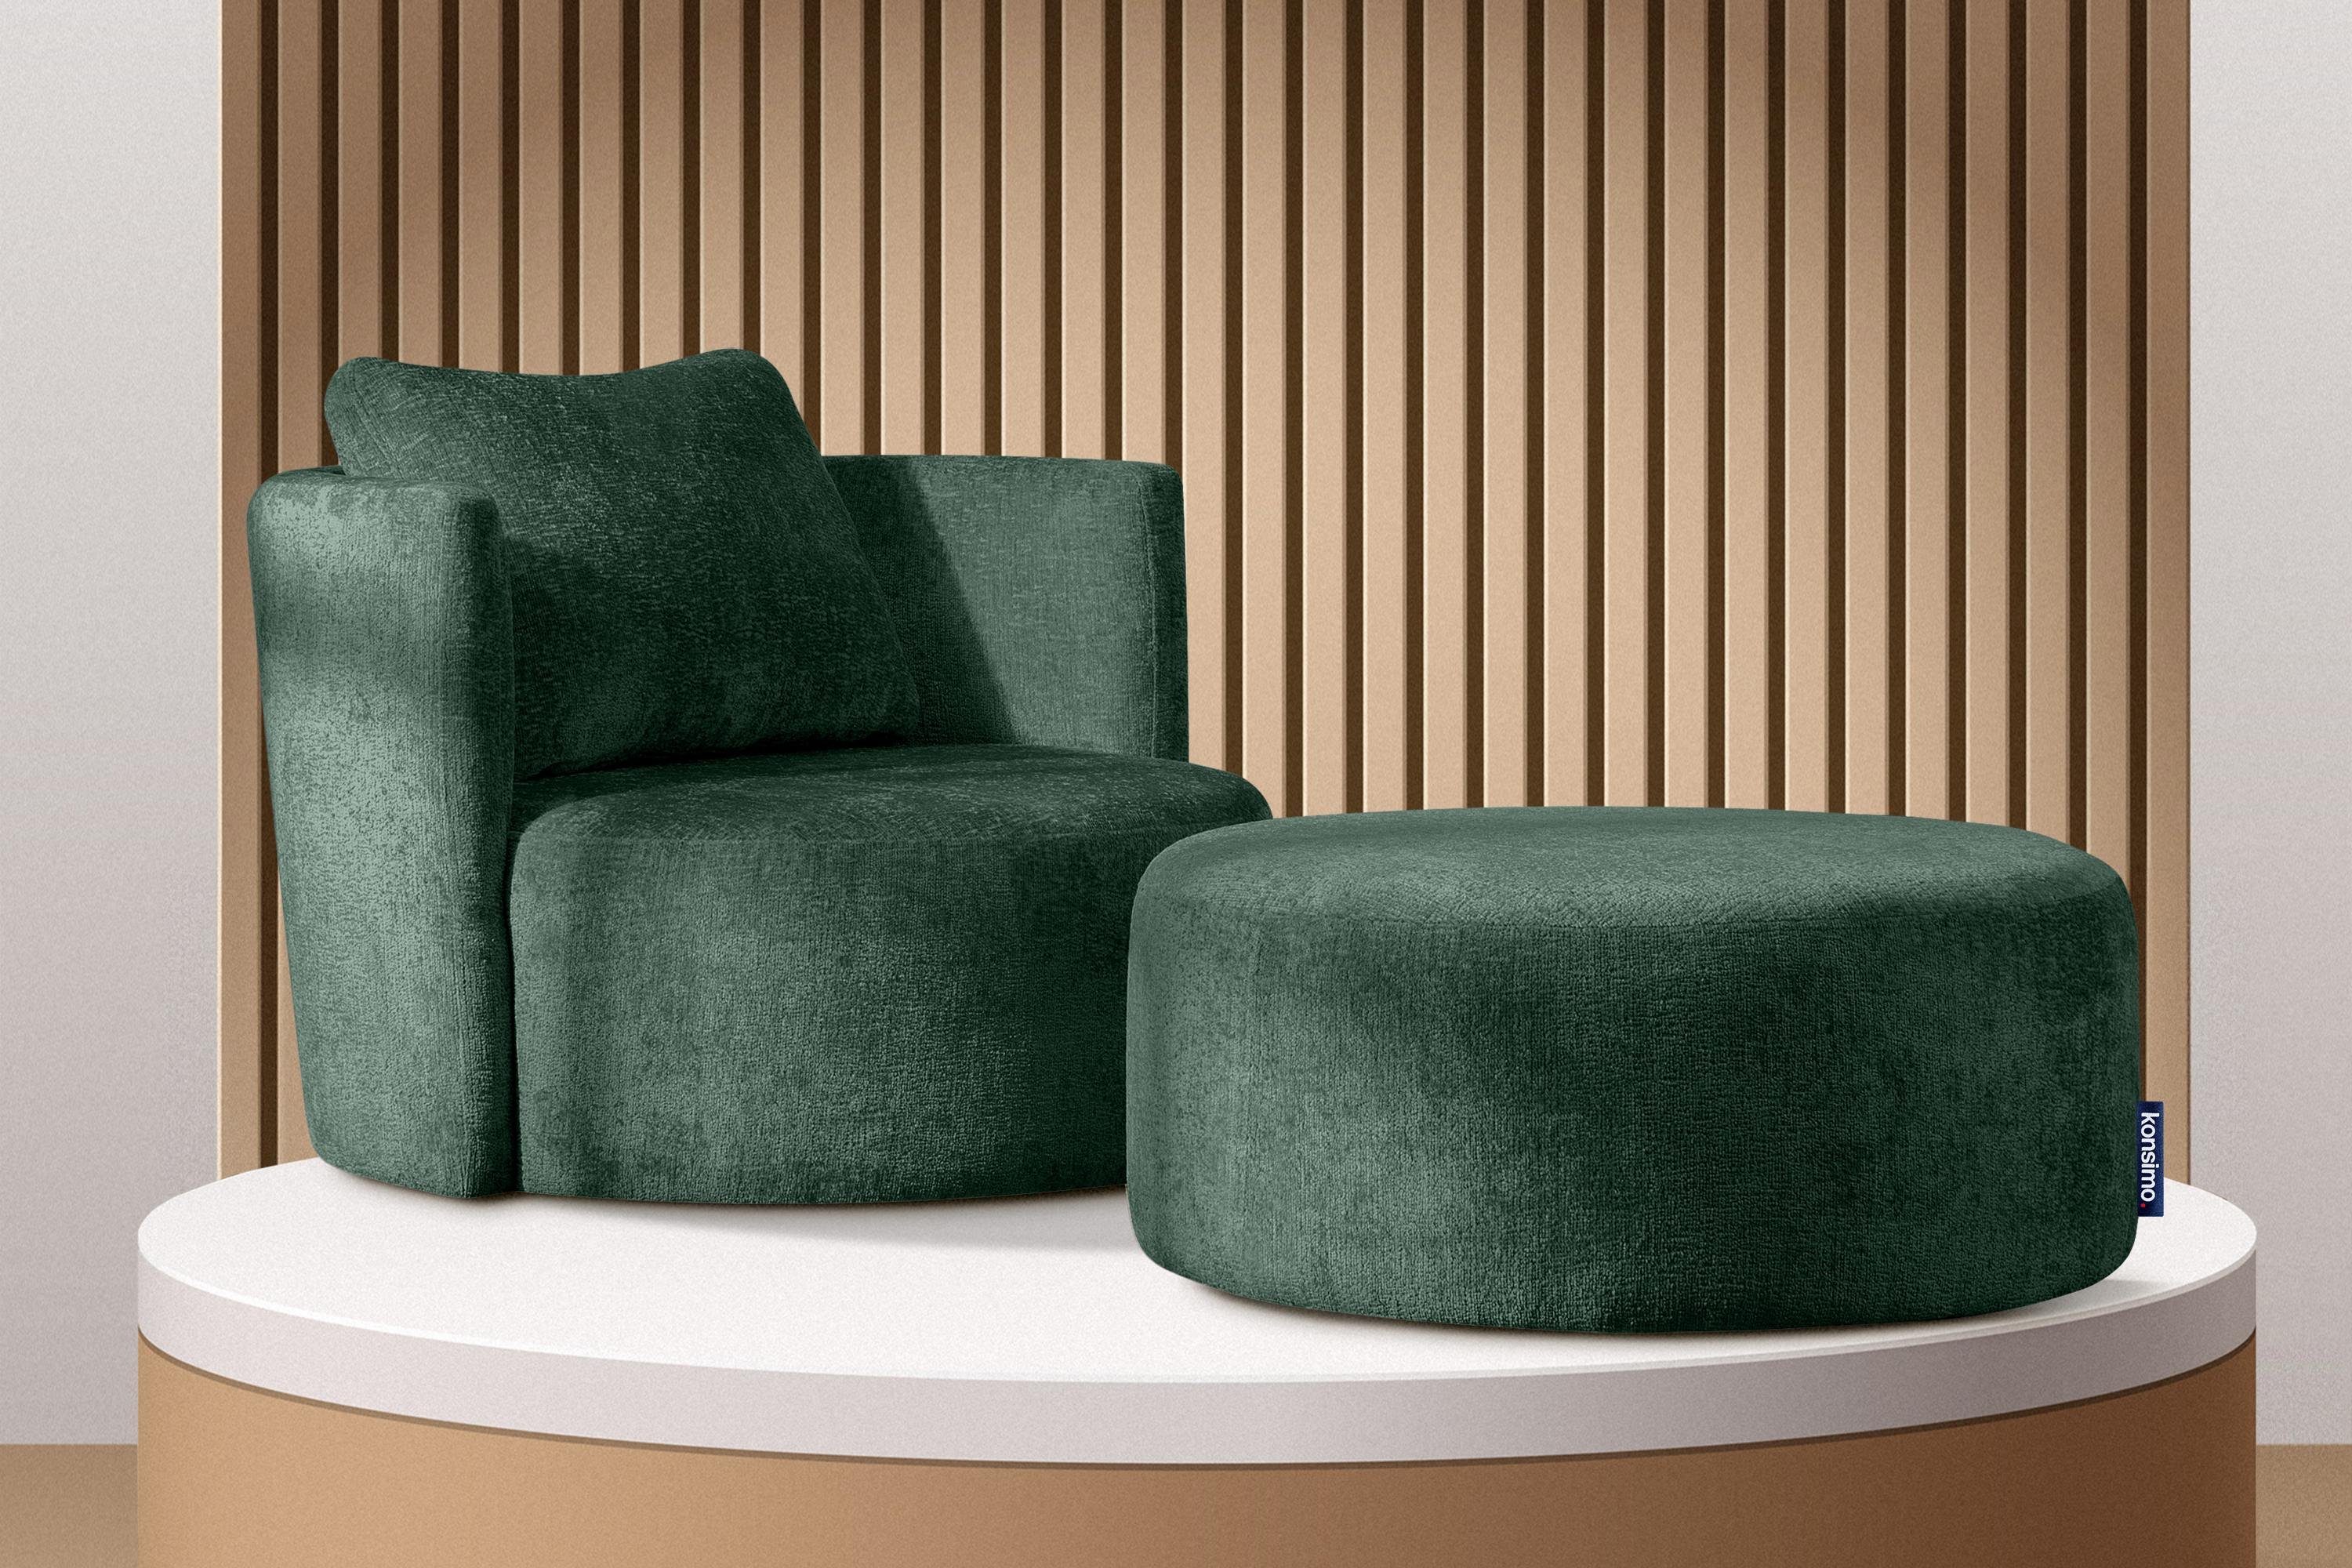 Loungesessel Chenille Konsimo dekorativem inklusive mit RAGGI, 360° Drehfunktion, Kissen, Drehsessel